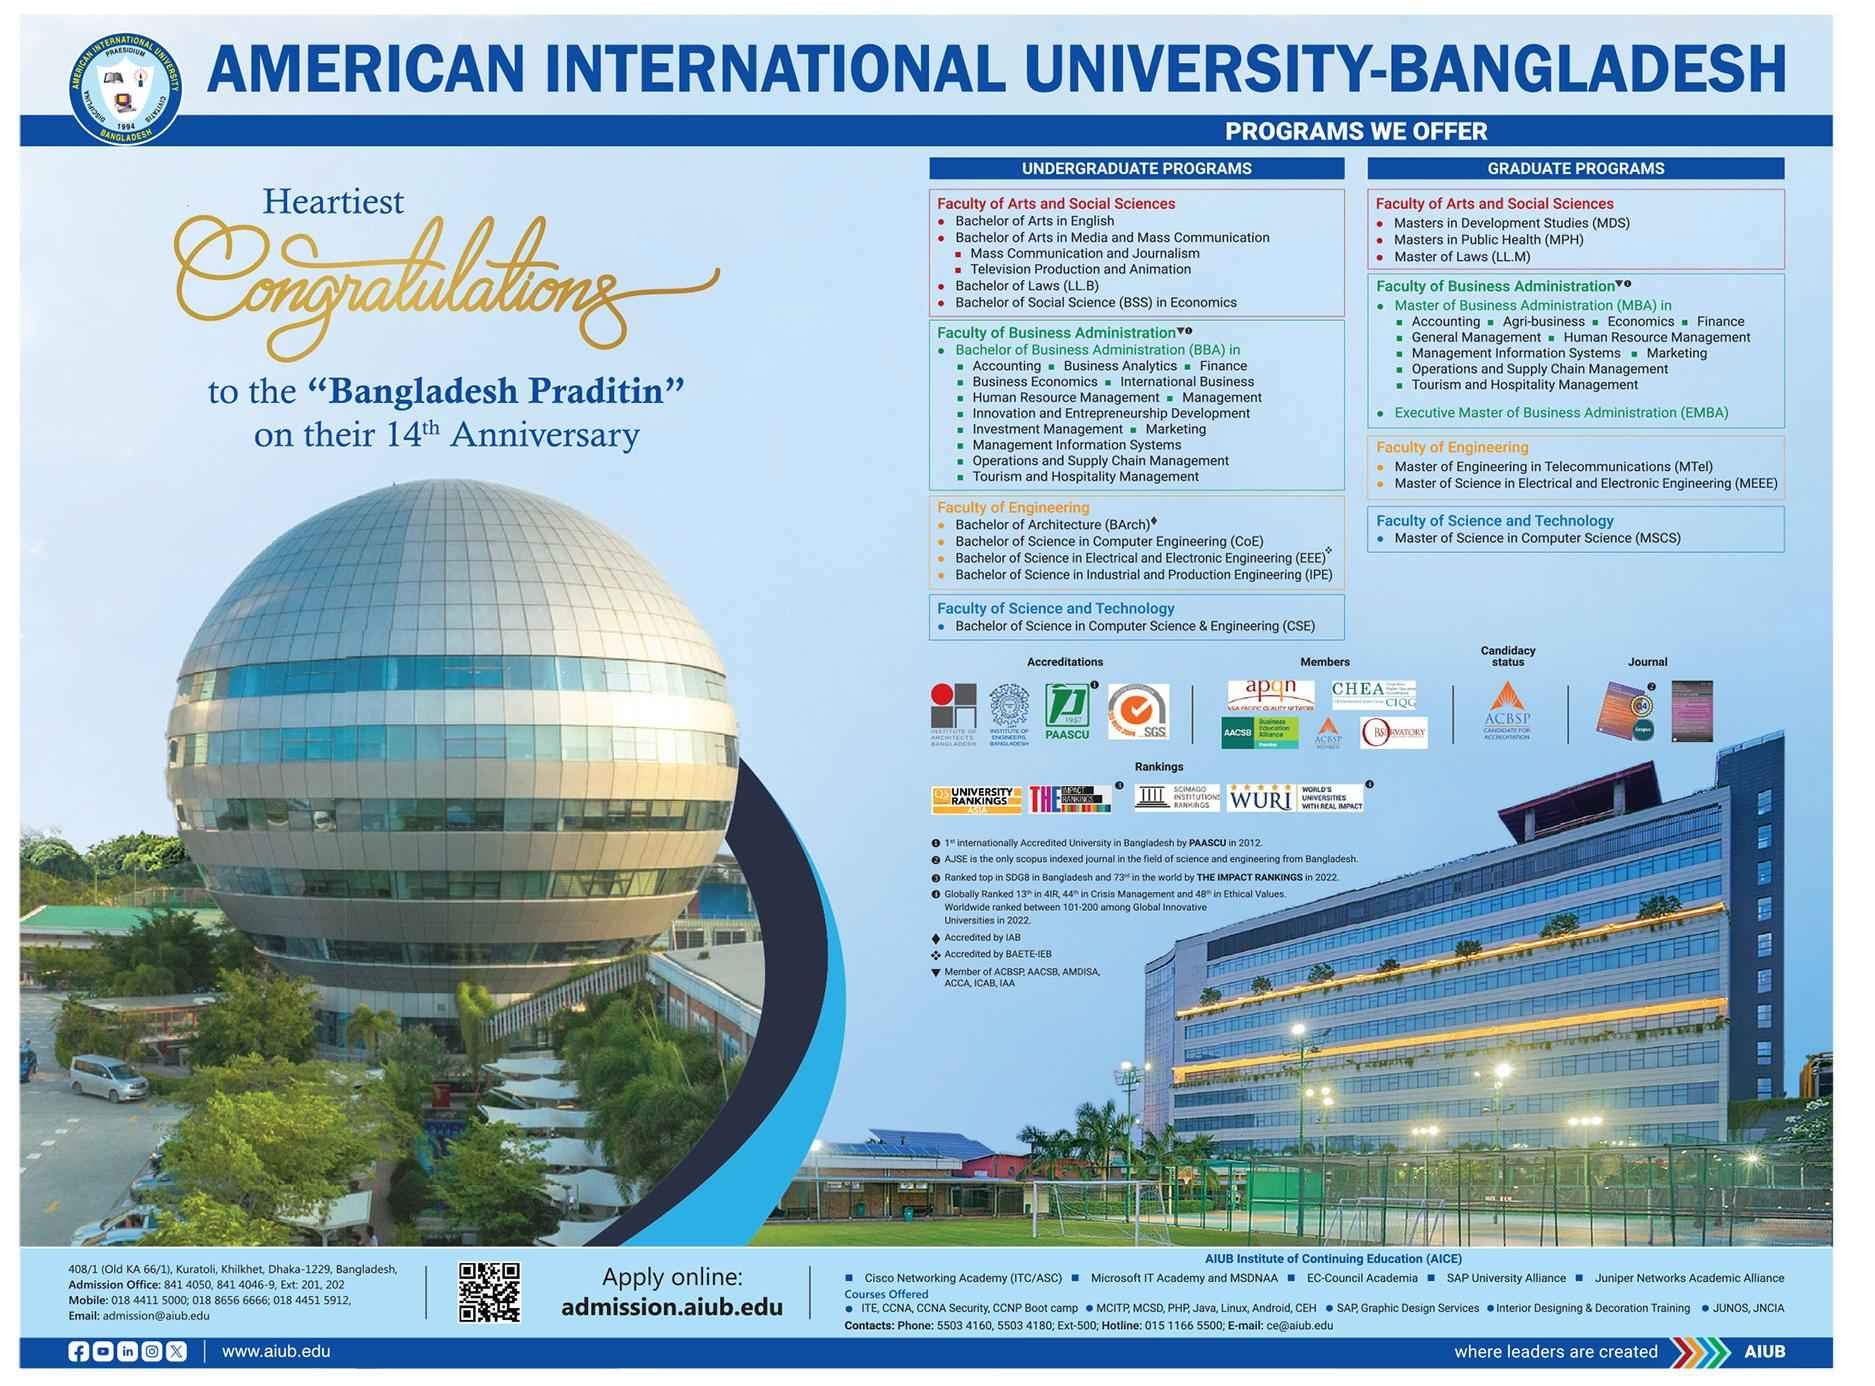 AIUB Admission | American International University-Bangladesh Admission